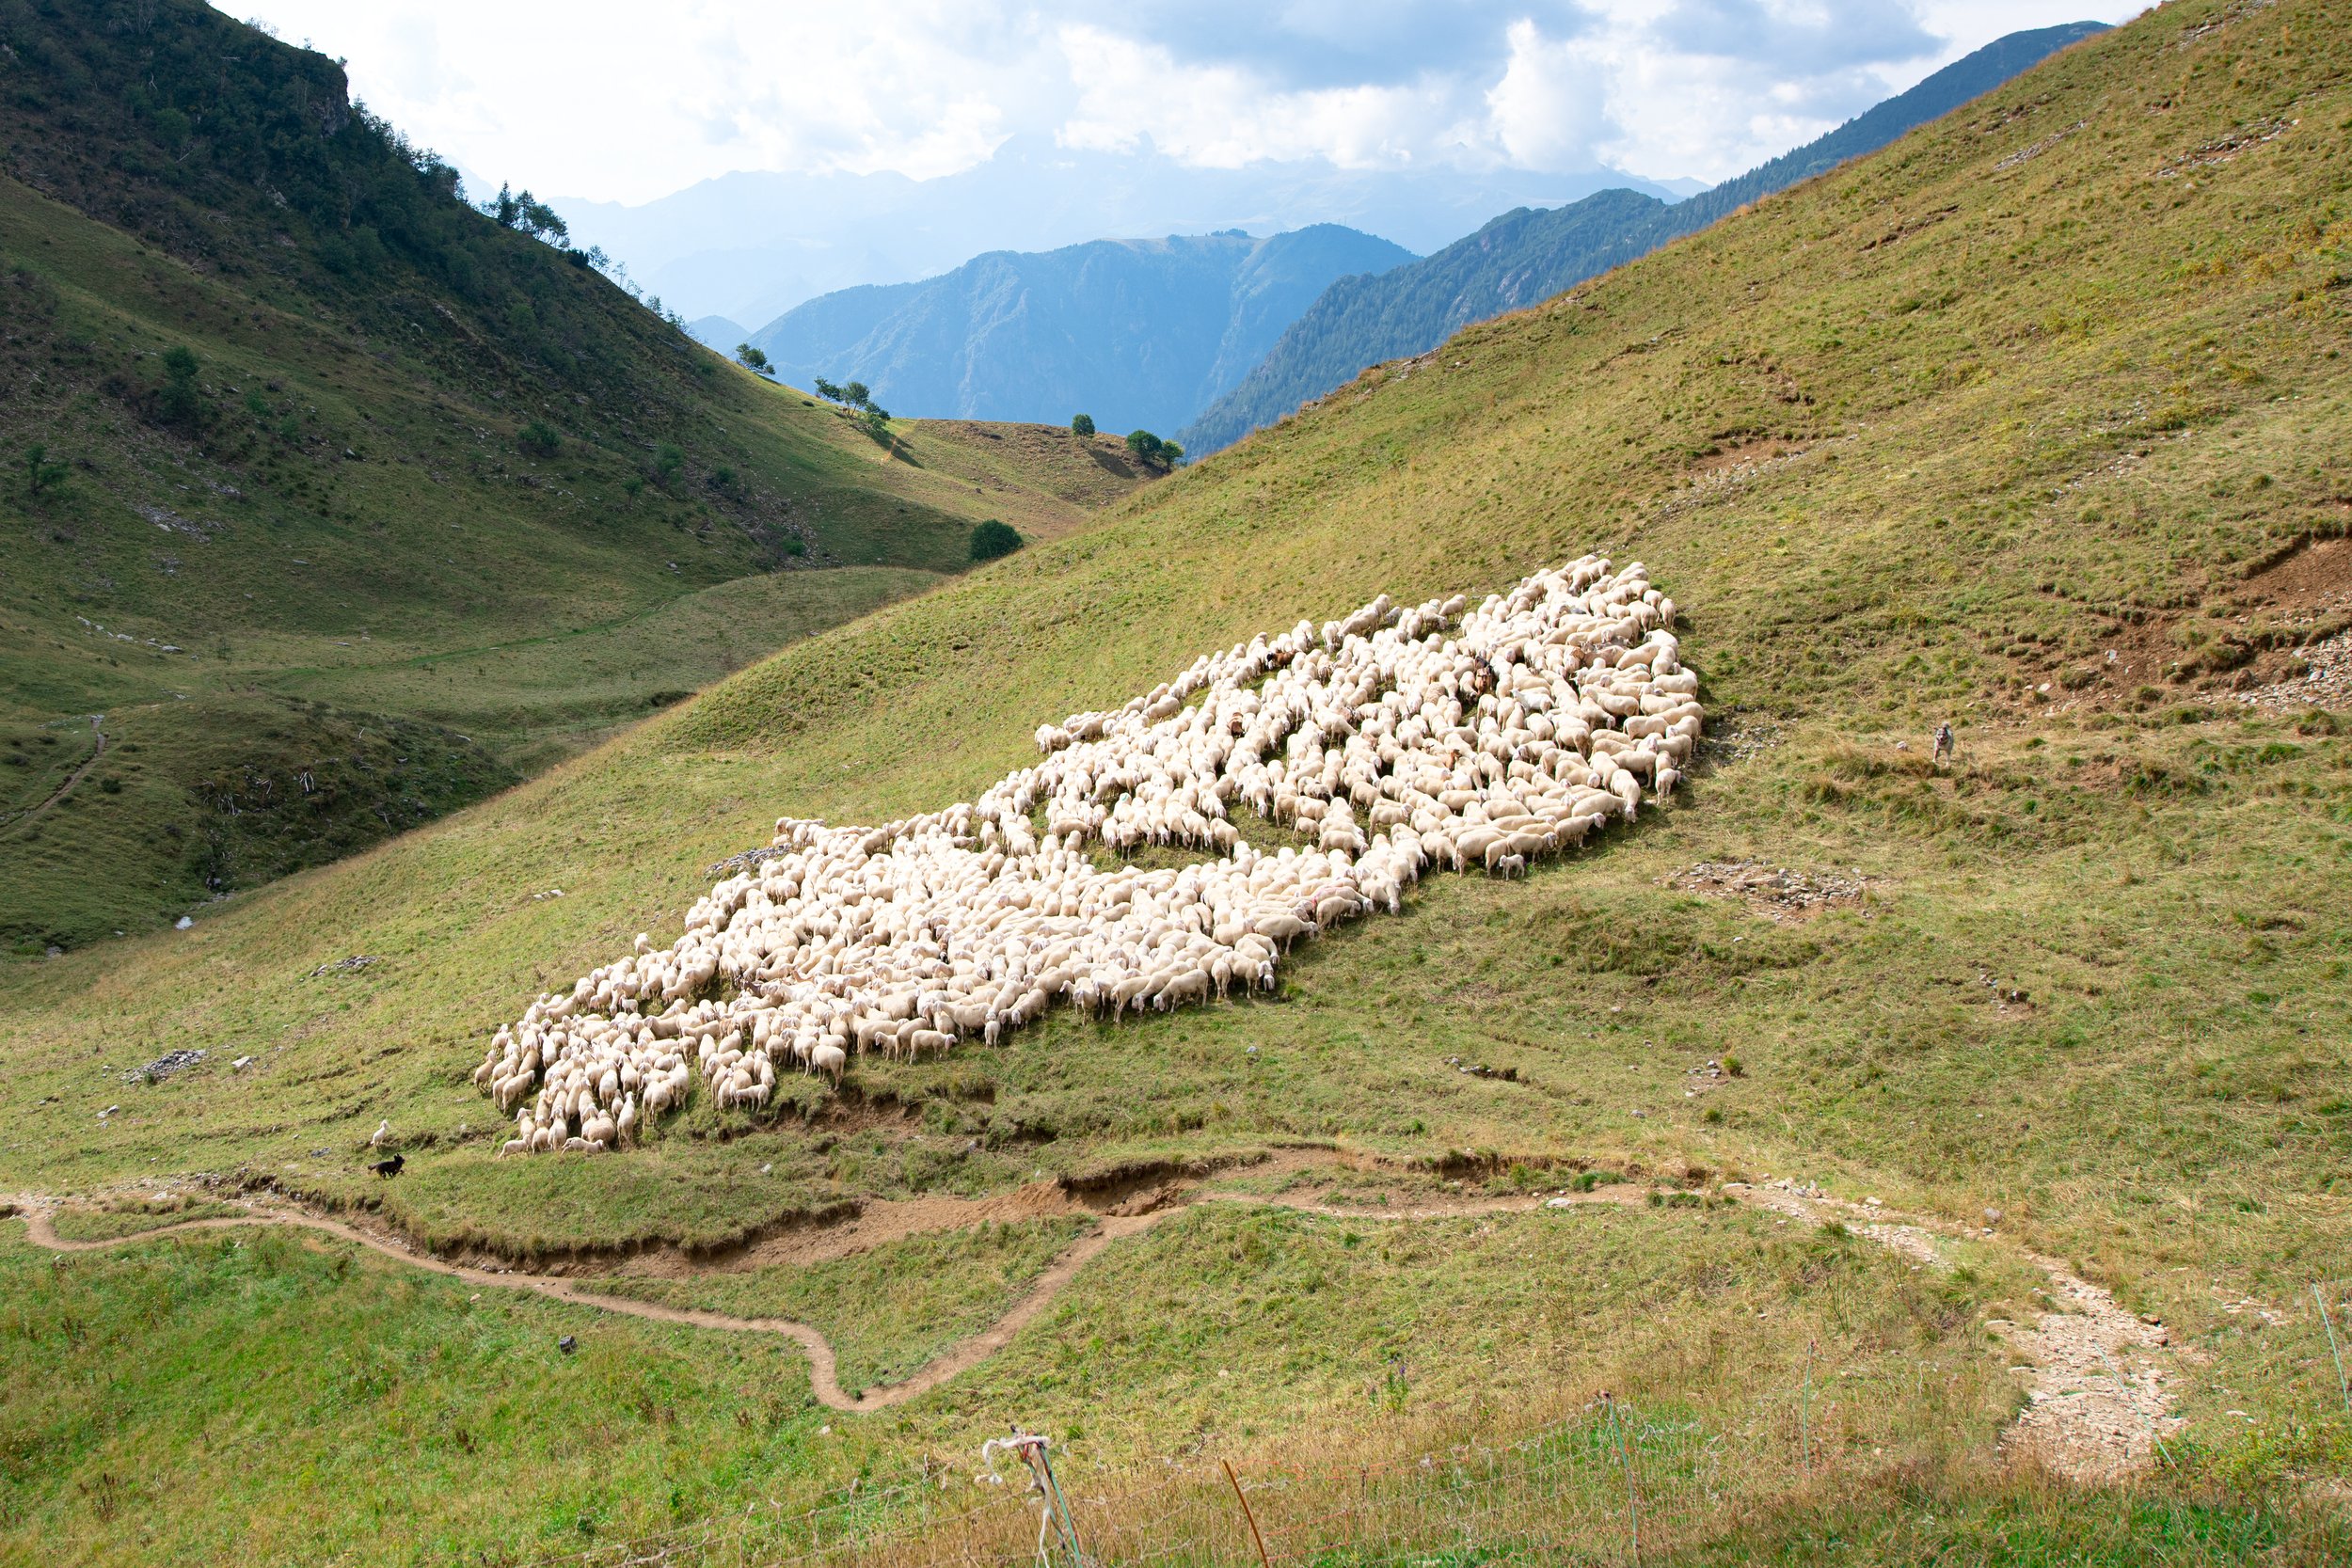 flock-sheep-near-mountain-trail-brembana-valley-italy.jpg